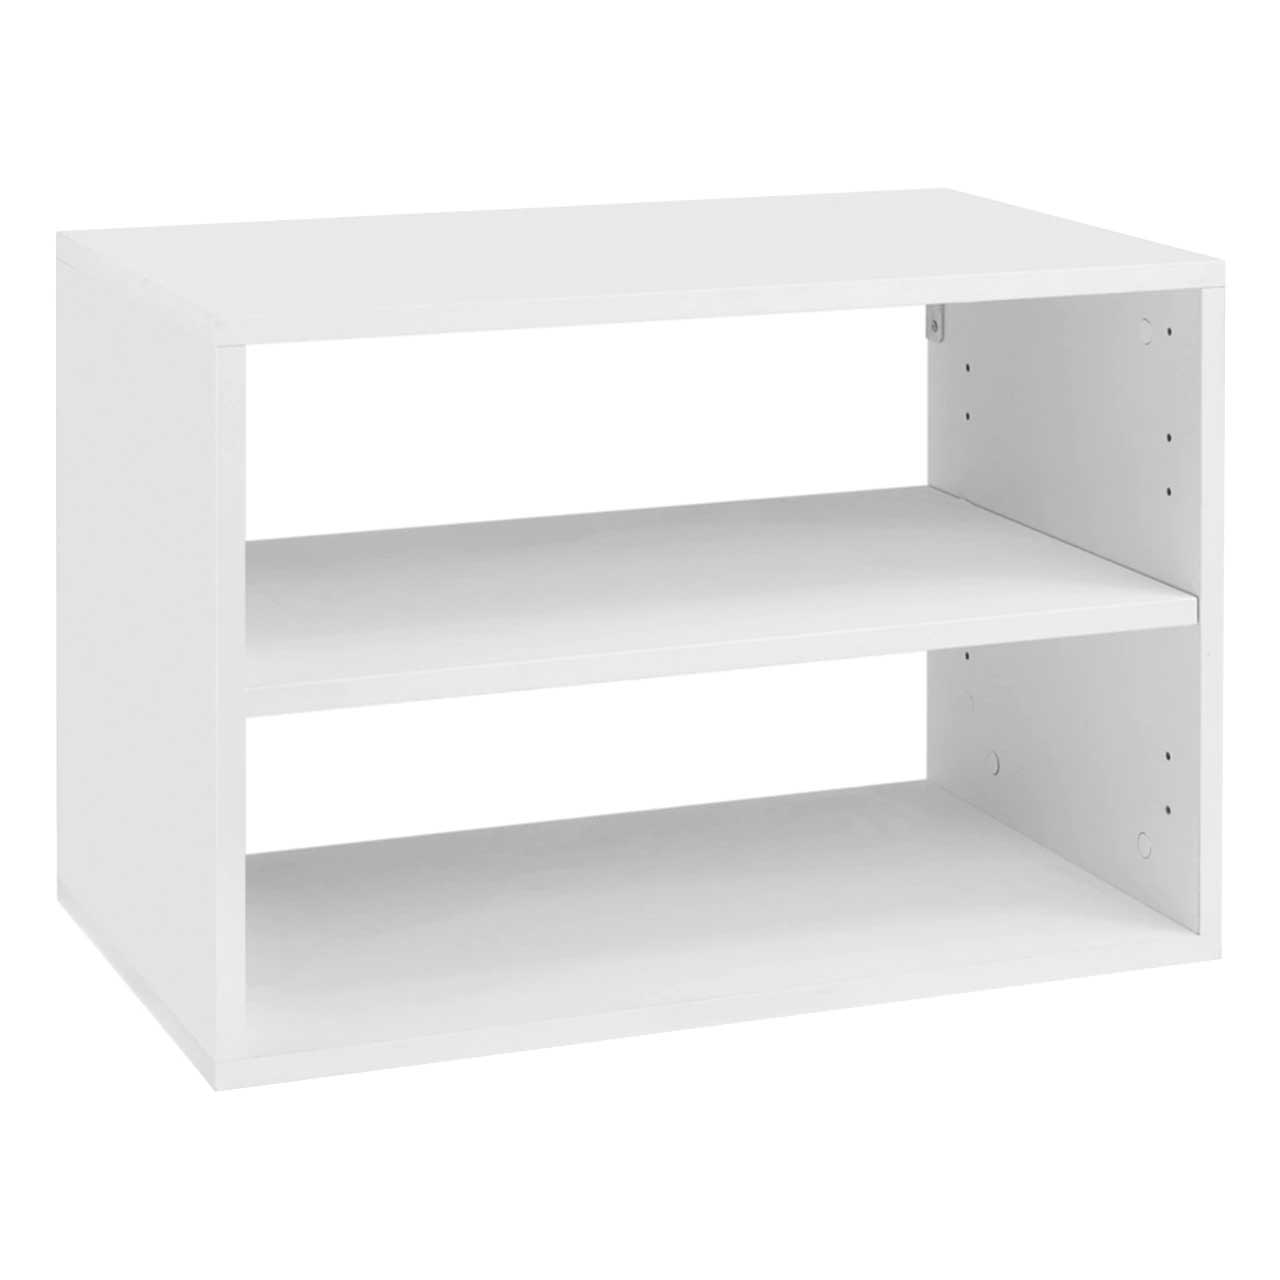 https://closetslasvegas.com/wp-content/uploads/2020/05/big-obox-one-shelf-white.jpg